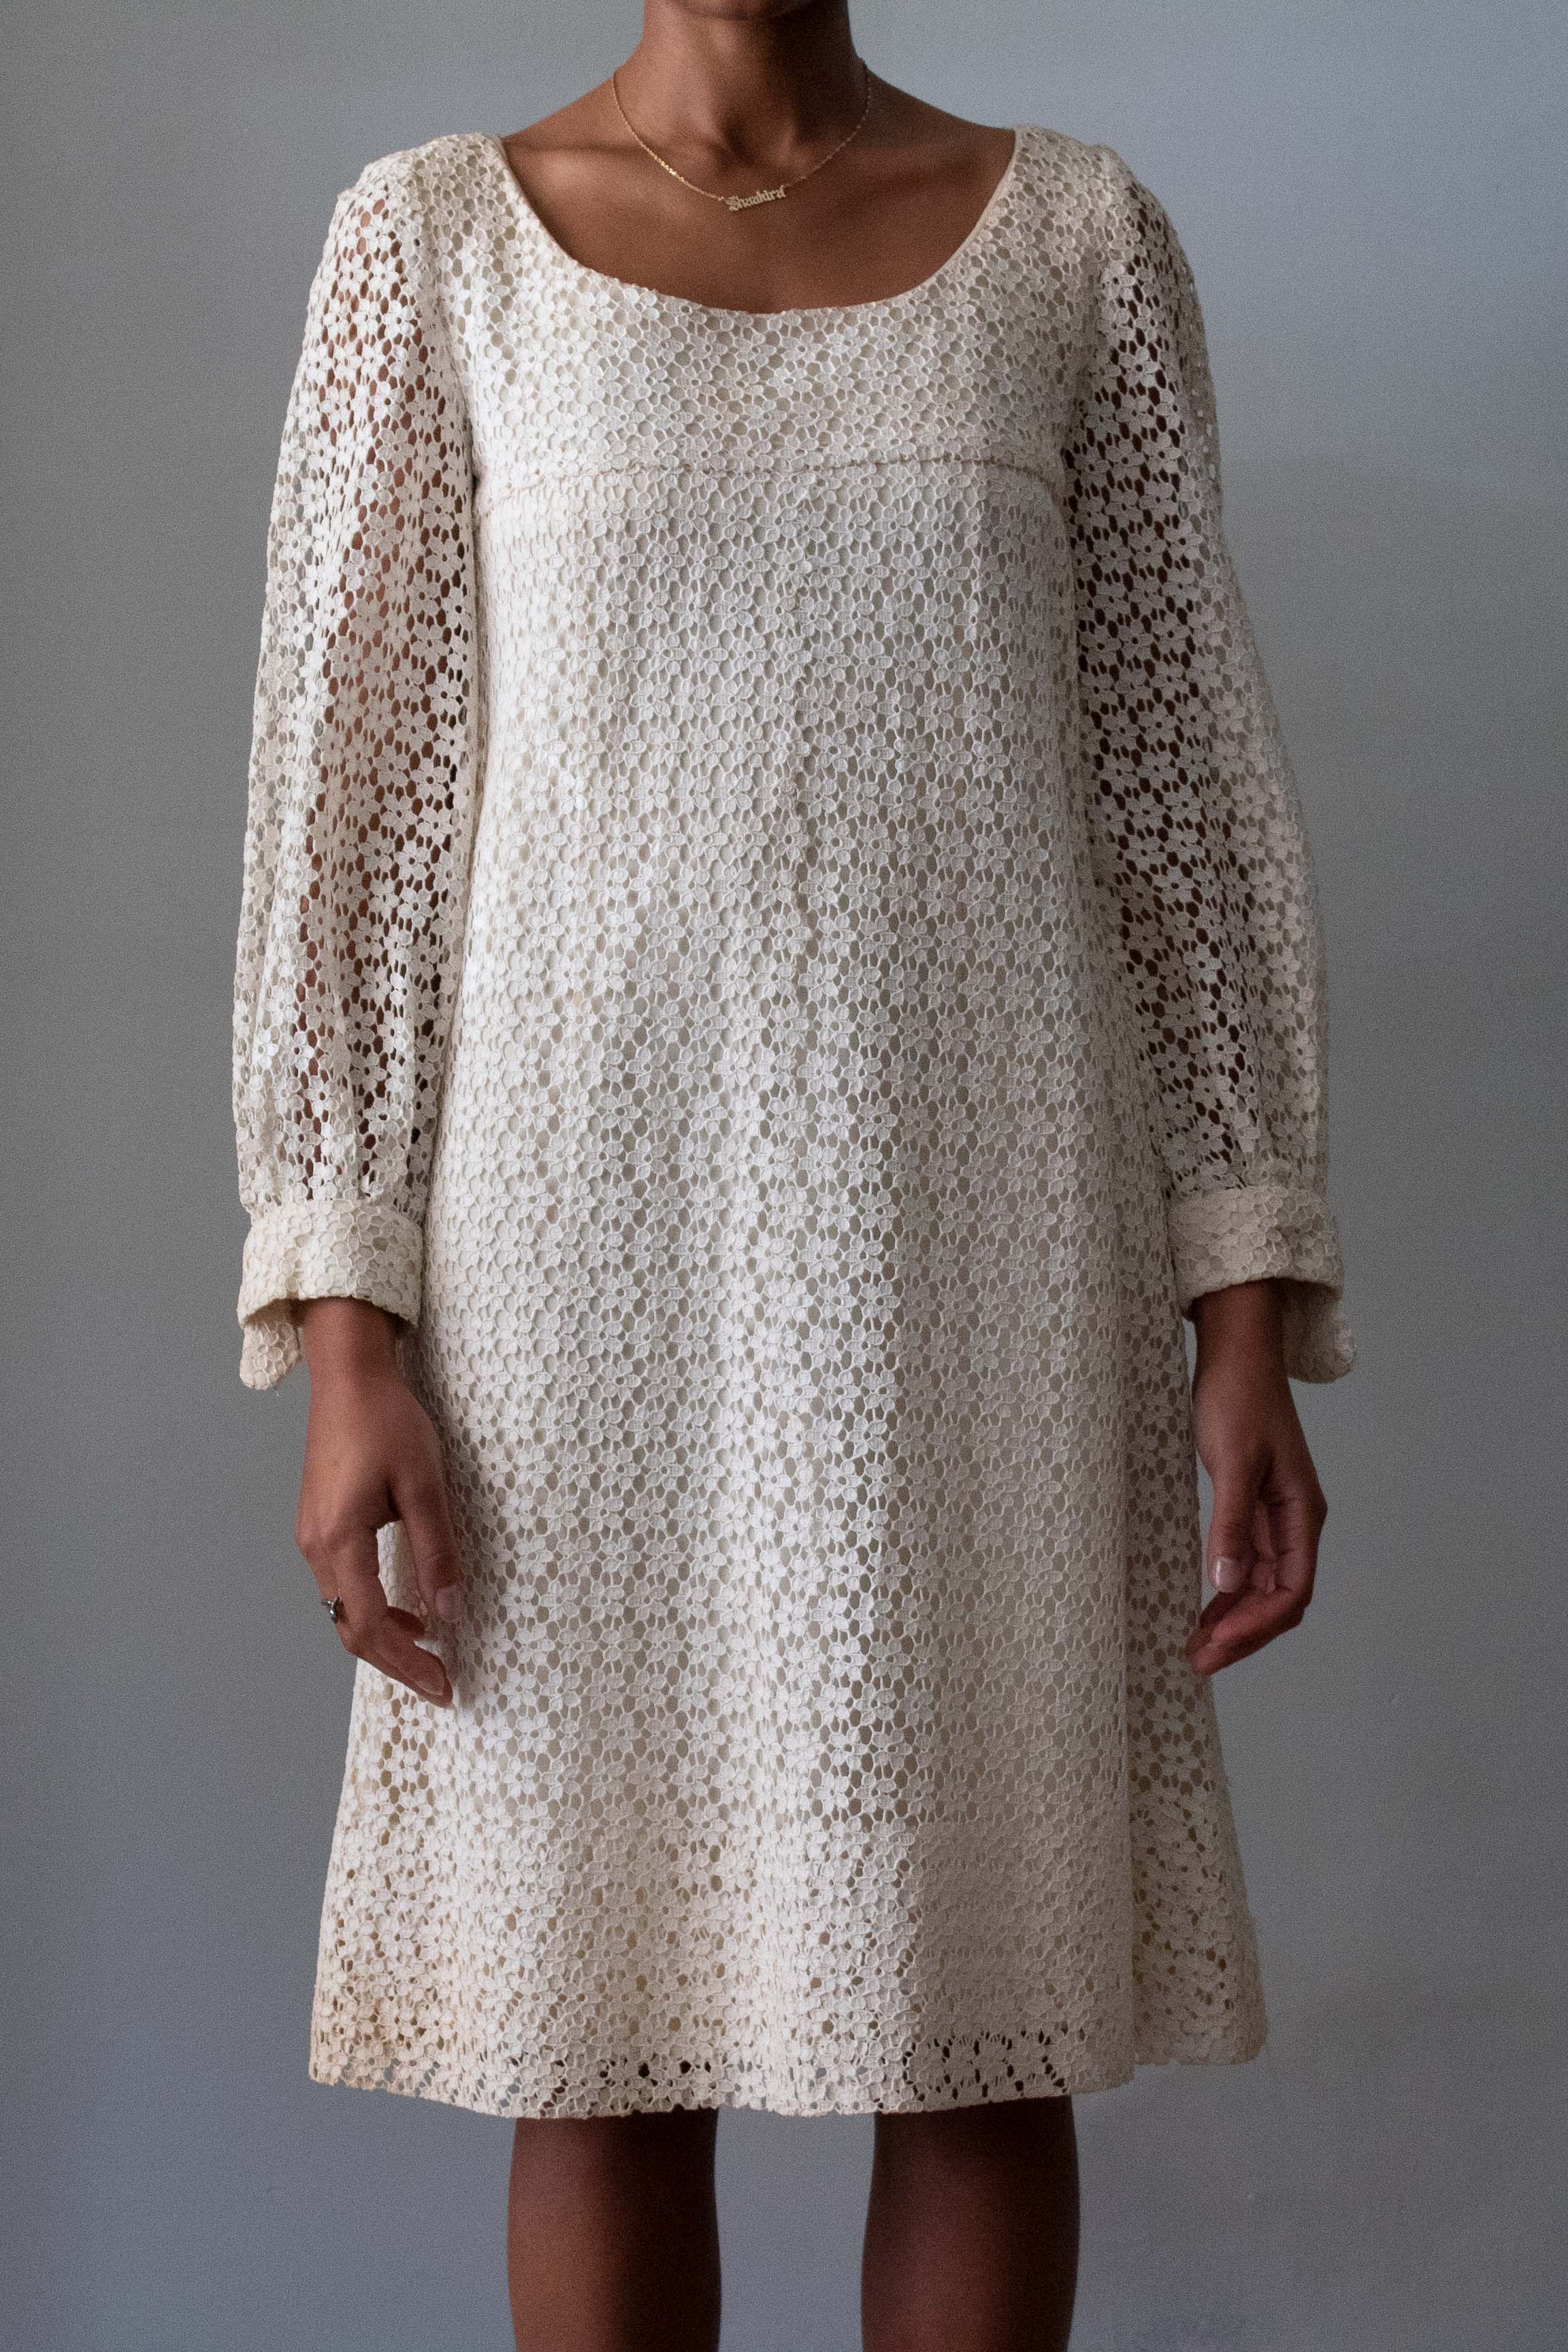 Nina Ricci White Floral Lace Dress